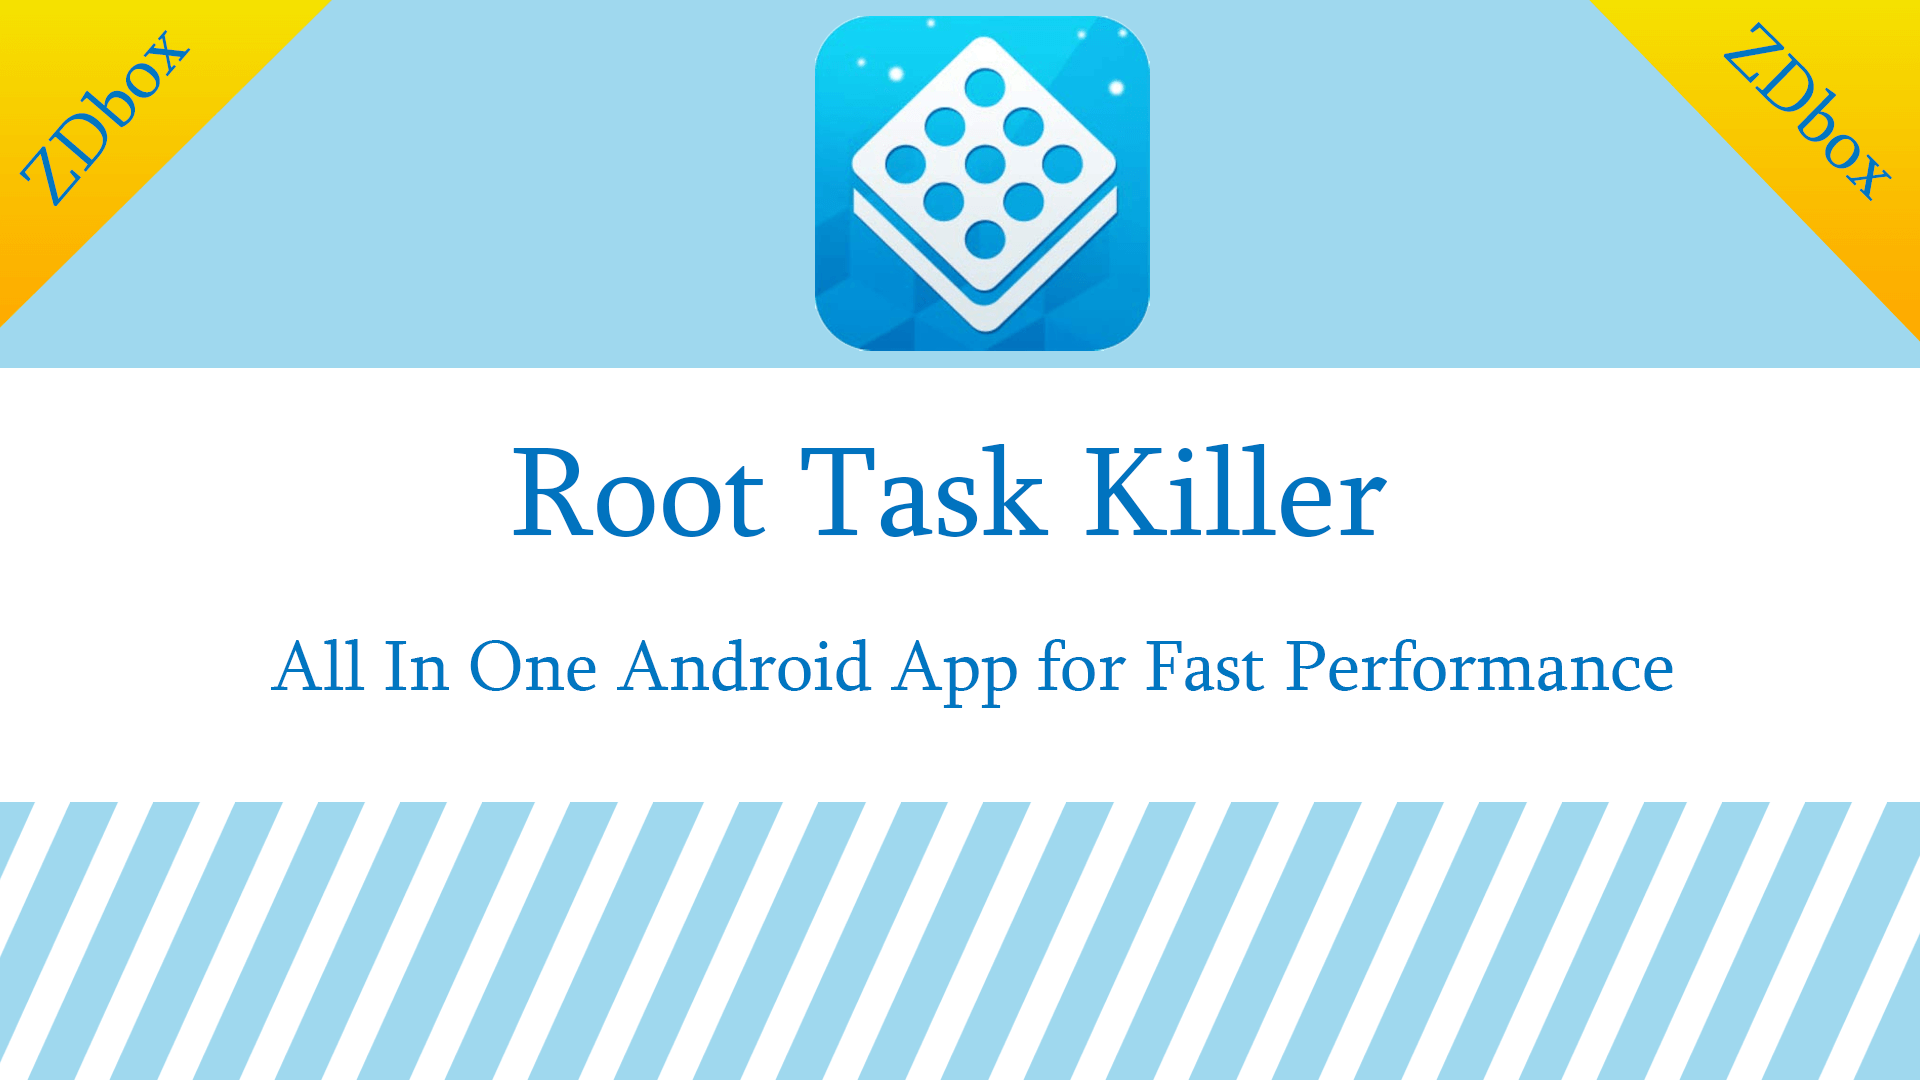 Zdbox Root Task Killer All In One App cho hiệu năng nhanh